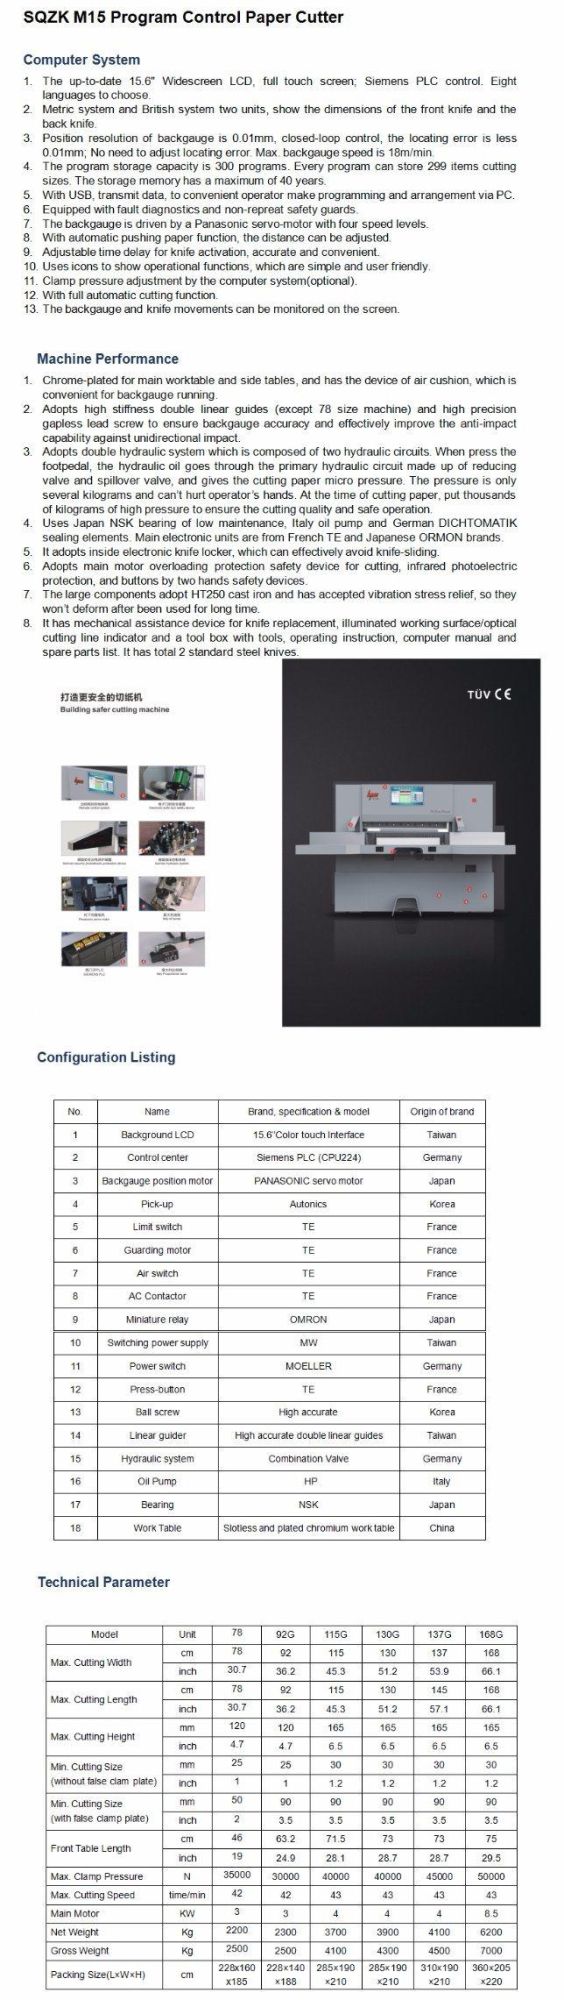 Program Control Paper Cutter (SQZK M15)